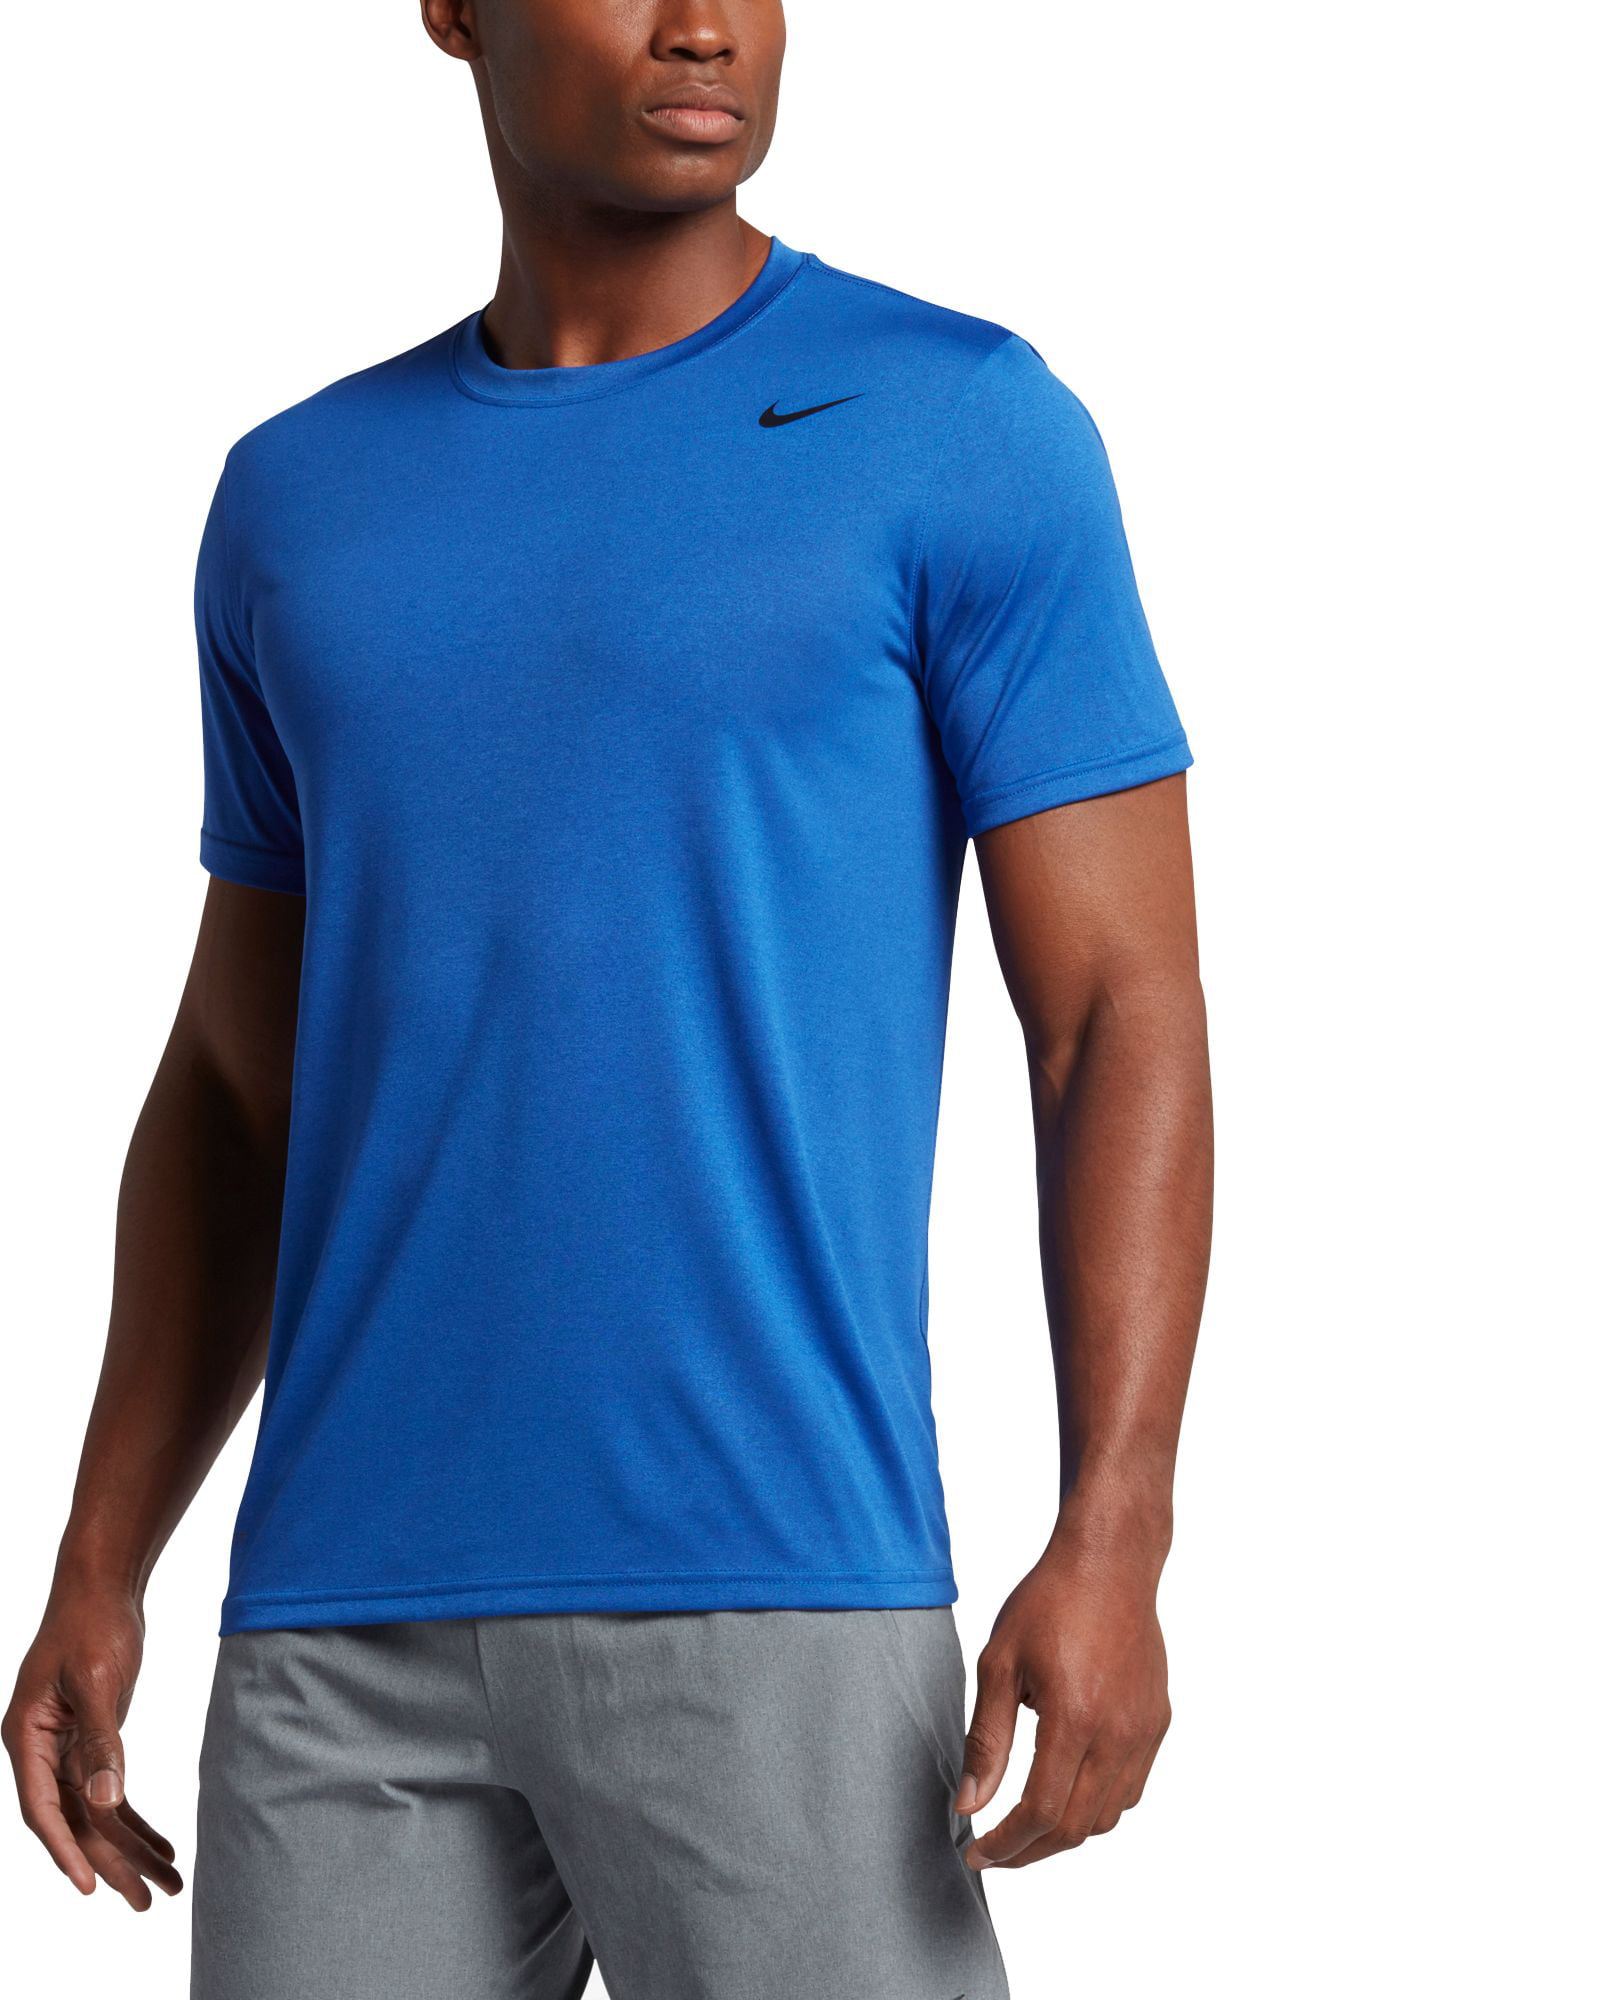 Nike Men's Legend 2.0 T-Shirt - Walmart.com